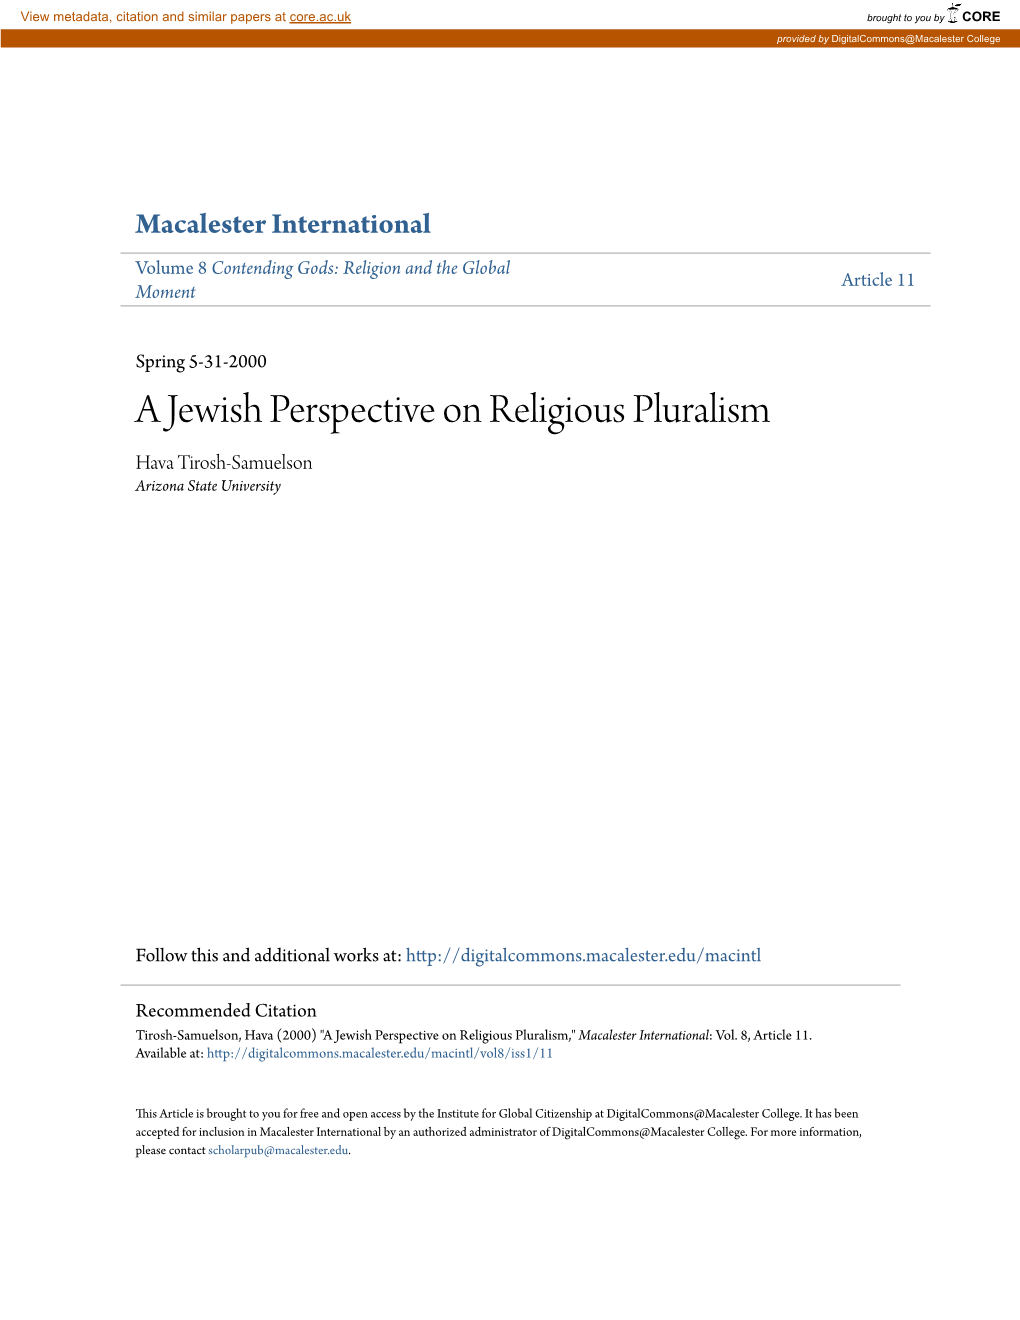 A Jewish Perspective on Religious Pluralism Hava Tirosh-Samuelson Arizona State University